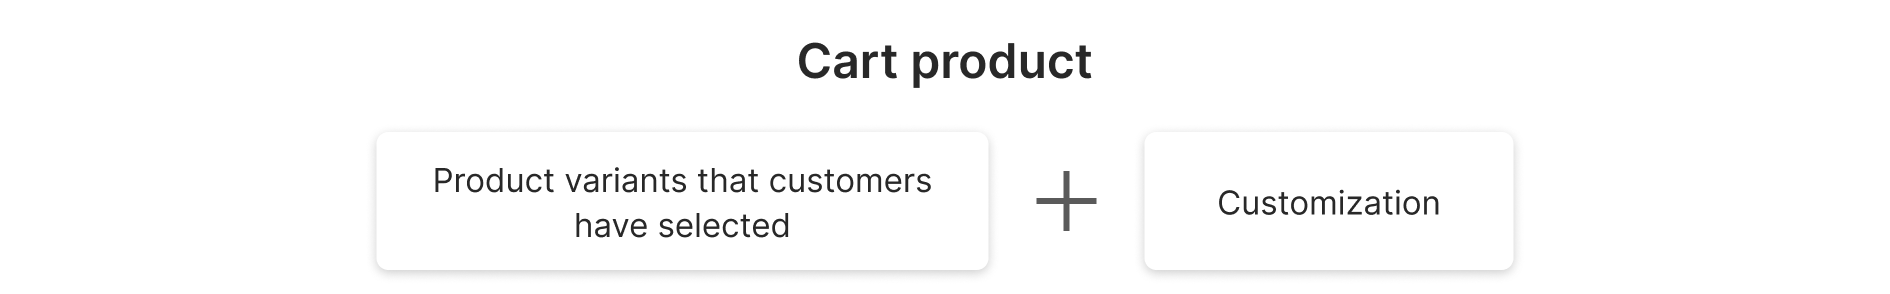 Cart product anatomy.